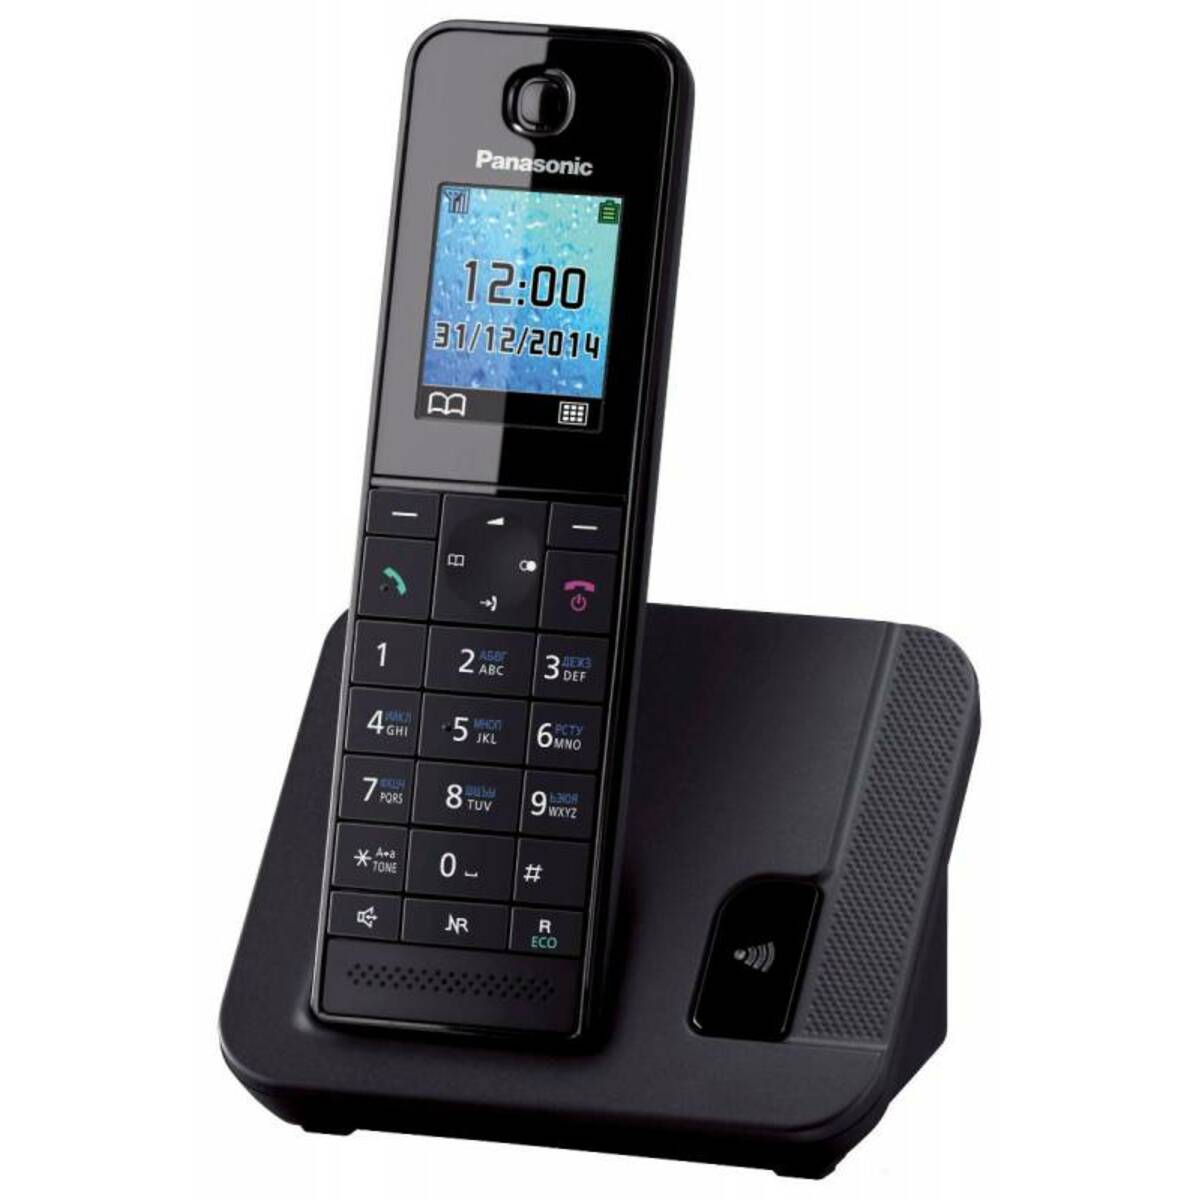 Р / Телефон Dect Panasonic KX-TGH210RUB (Цвет: Black)